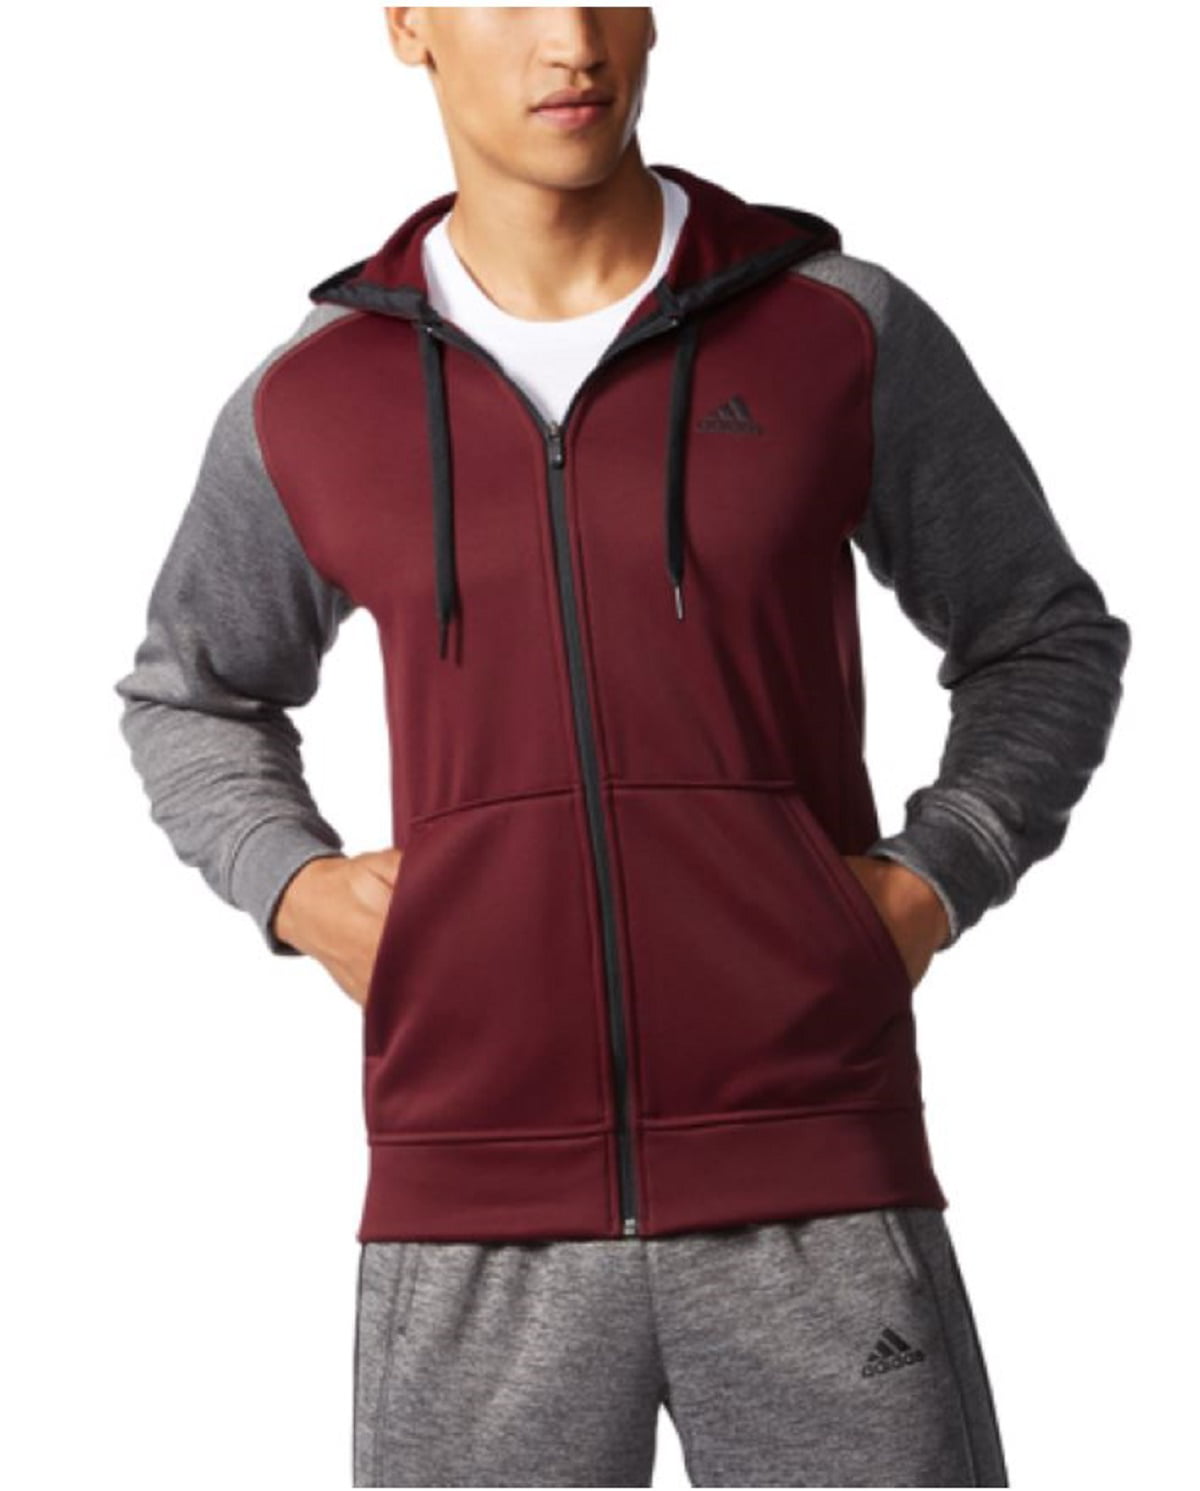 Adidas - Adidas Men’s Tech Fleece full Zip Hooded Jacket with Climawarm